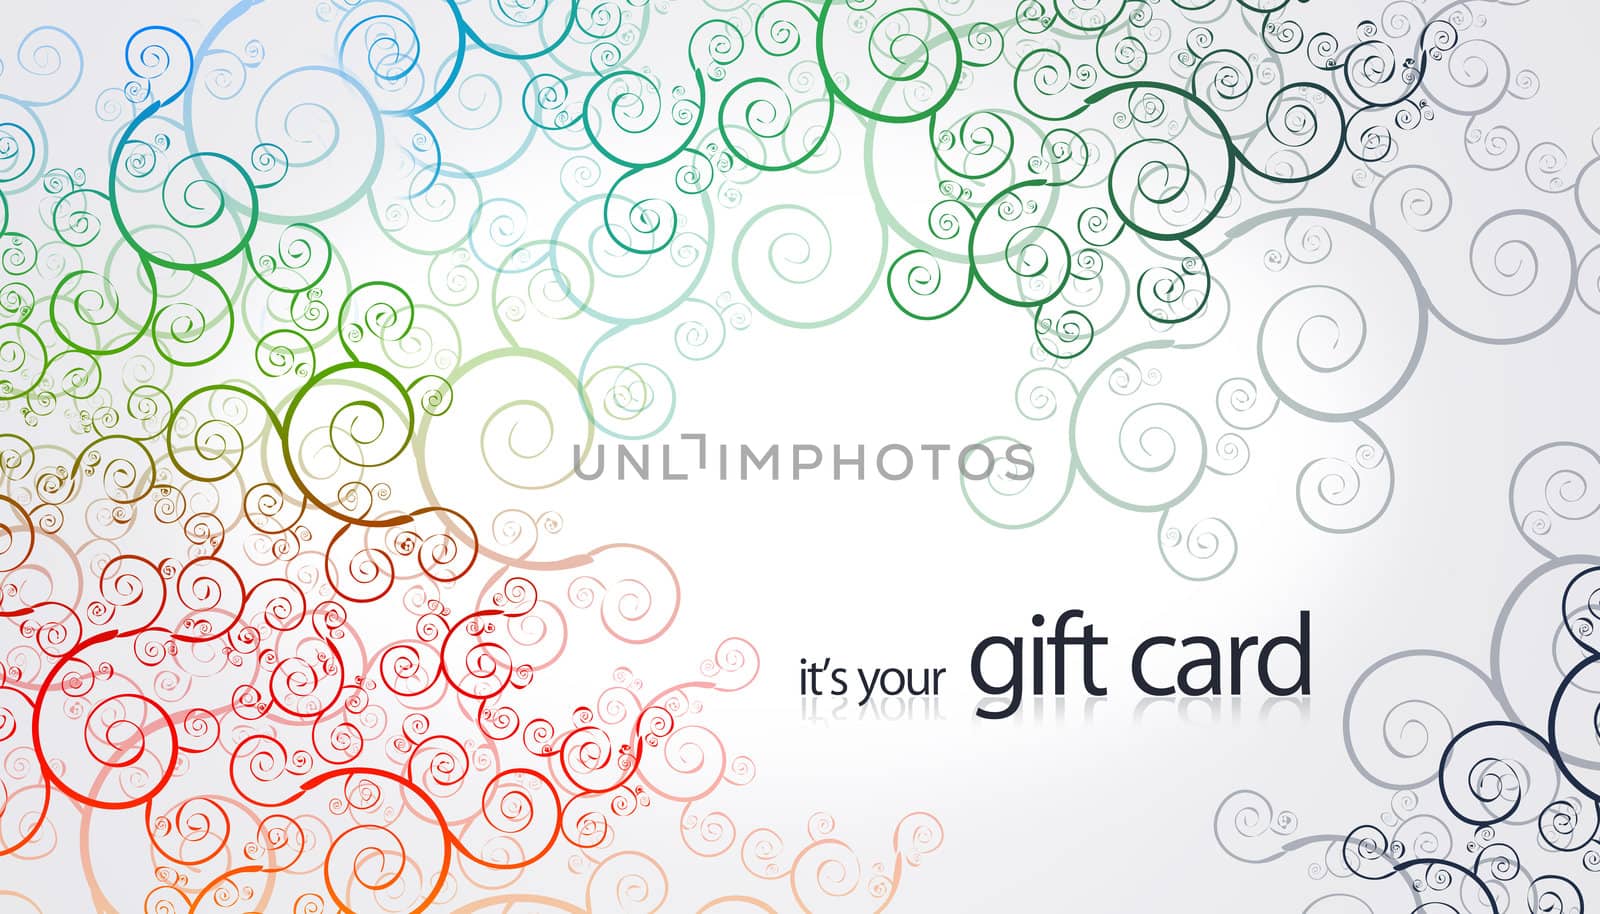 Gift Card - Floral Elements by kbuntu